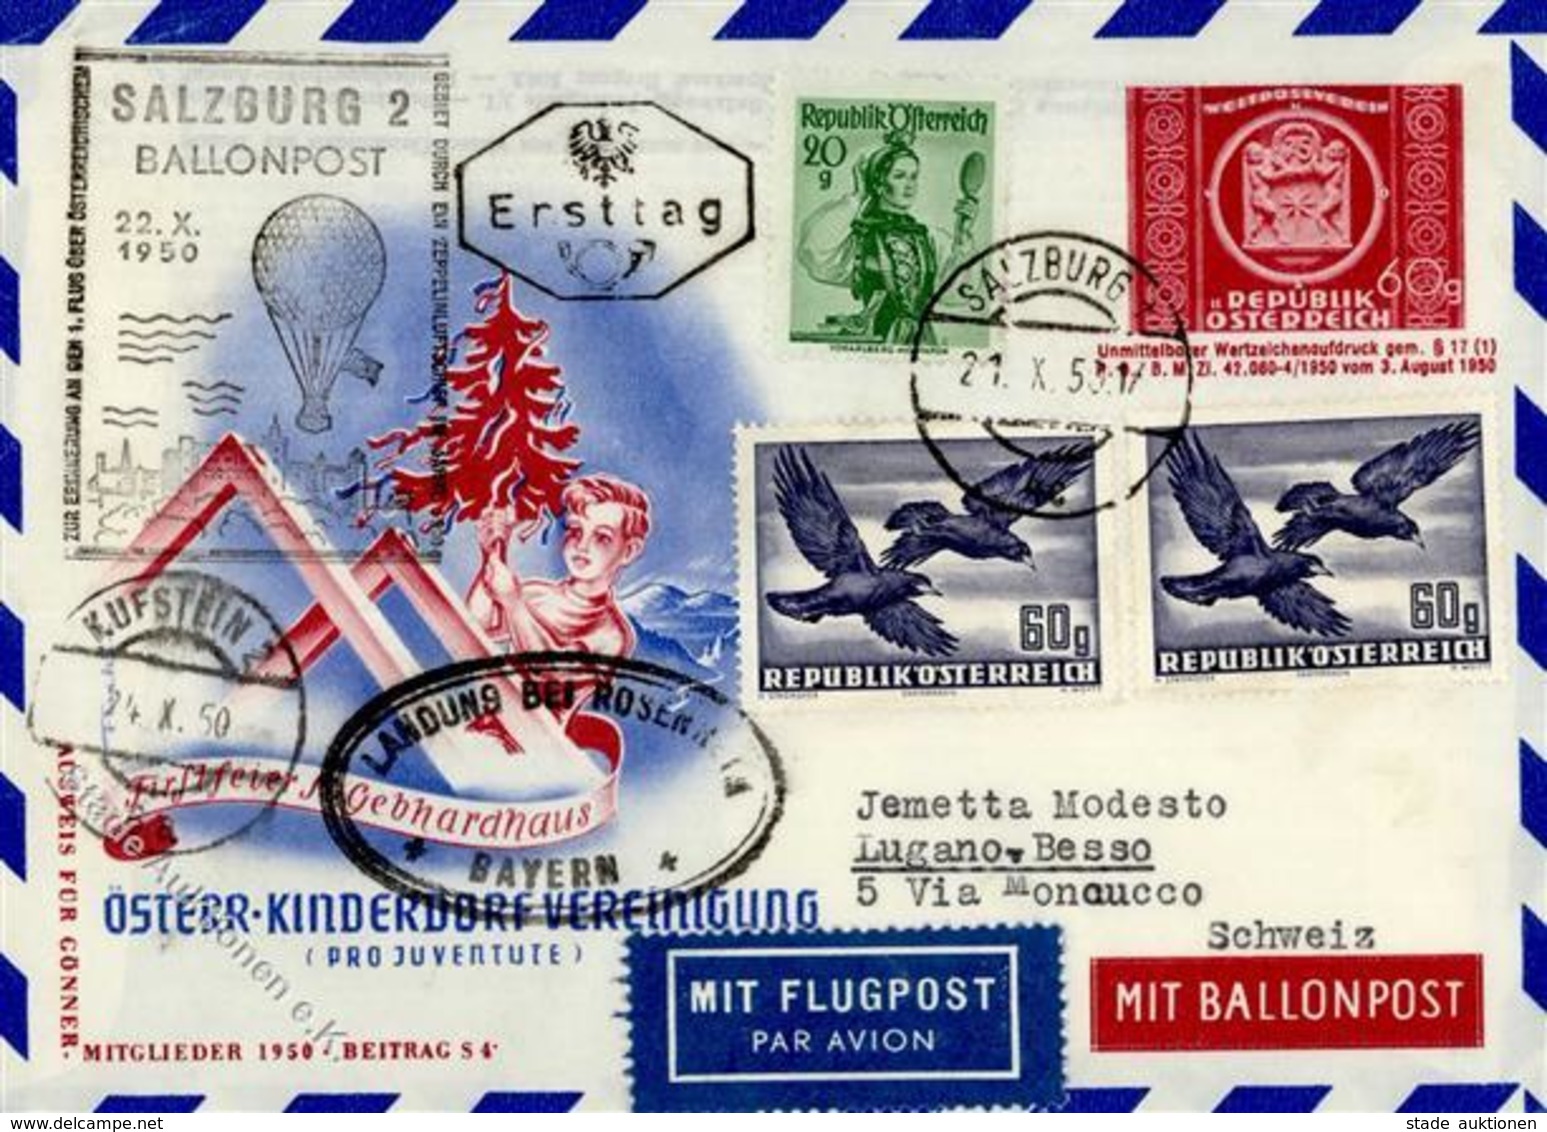 Ballon, 1950, Österreich, SALZBURG BALLONPOST 22.X.50", 60 G UPU GAU, 3 Werte Zusatz, Dabei 60 G Vögel, Landung Bei Rose - Fesselballons